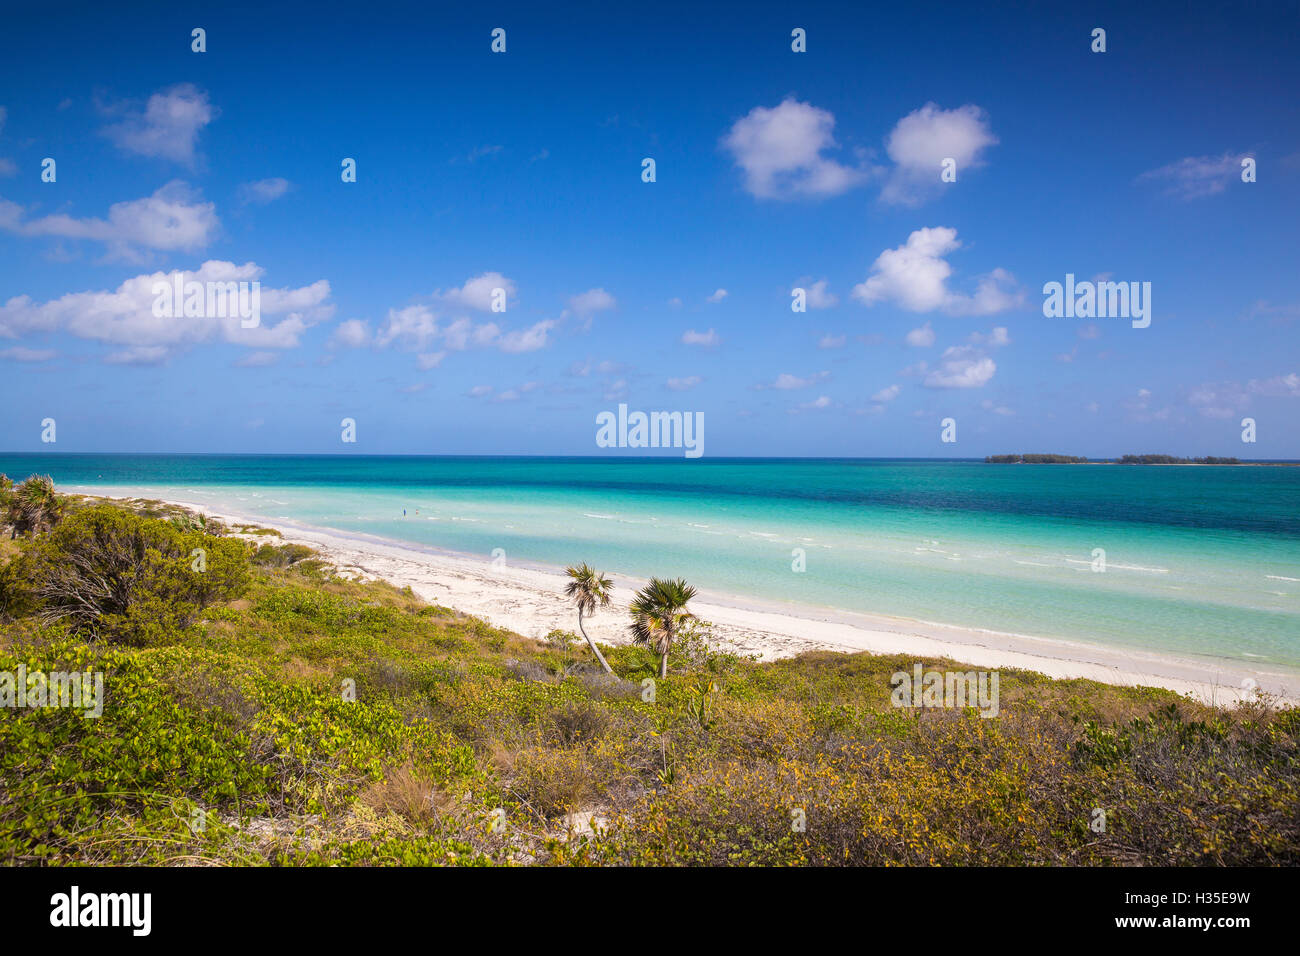 Playa Pilar, Cayo Guillermo, Jardines del Rey, province de Ciego de Avila, Cuba, Antilles, Caraïbes Banque D'Images